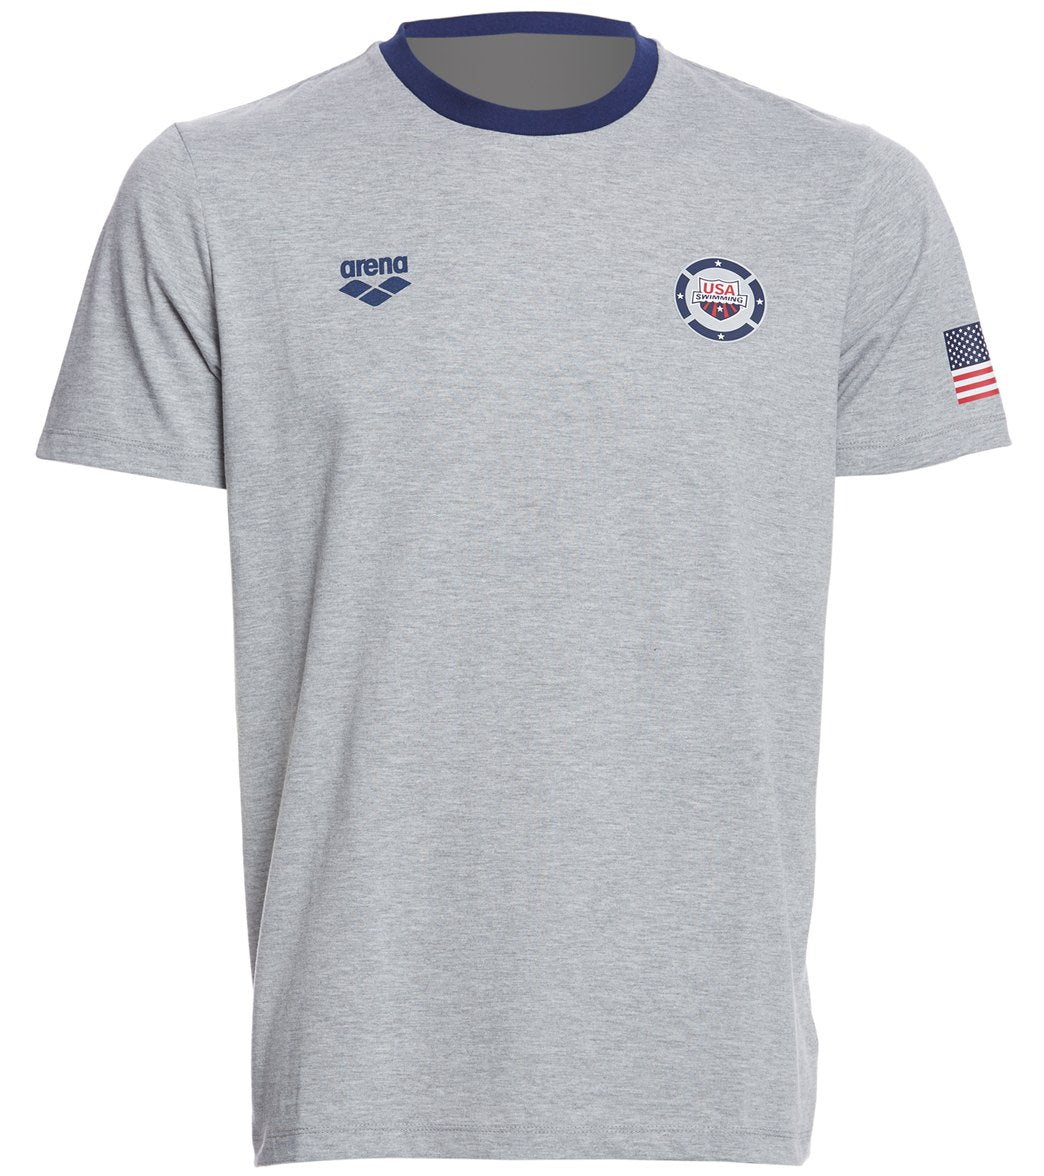 Arena Men's Usa Swimming Tee Shirt - Medium Grey Melange/Navy Xxlarge Size Xxl Cotton - Swimoutlet.com